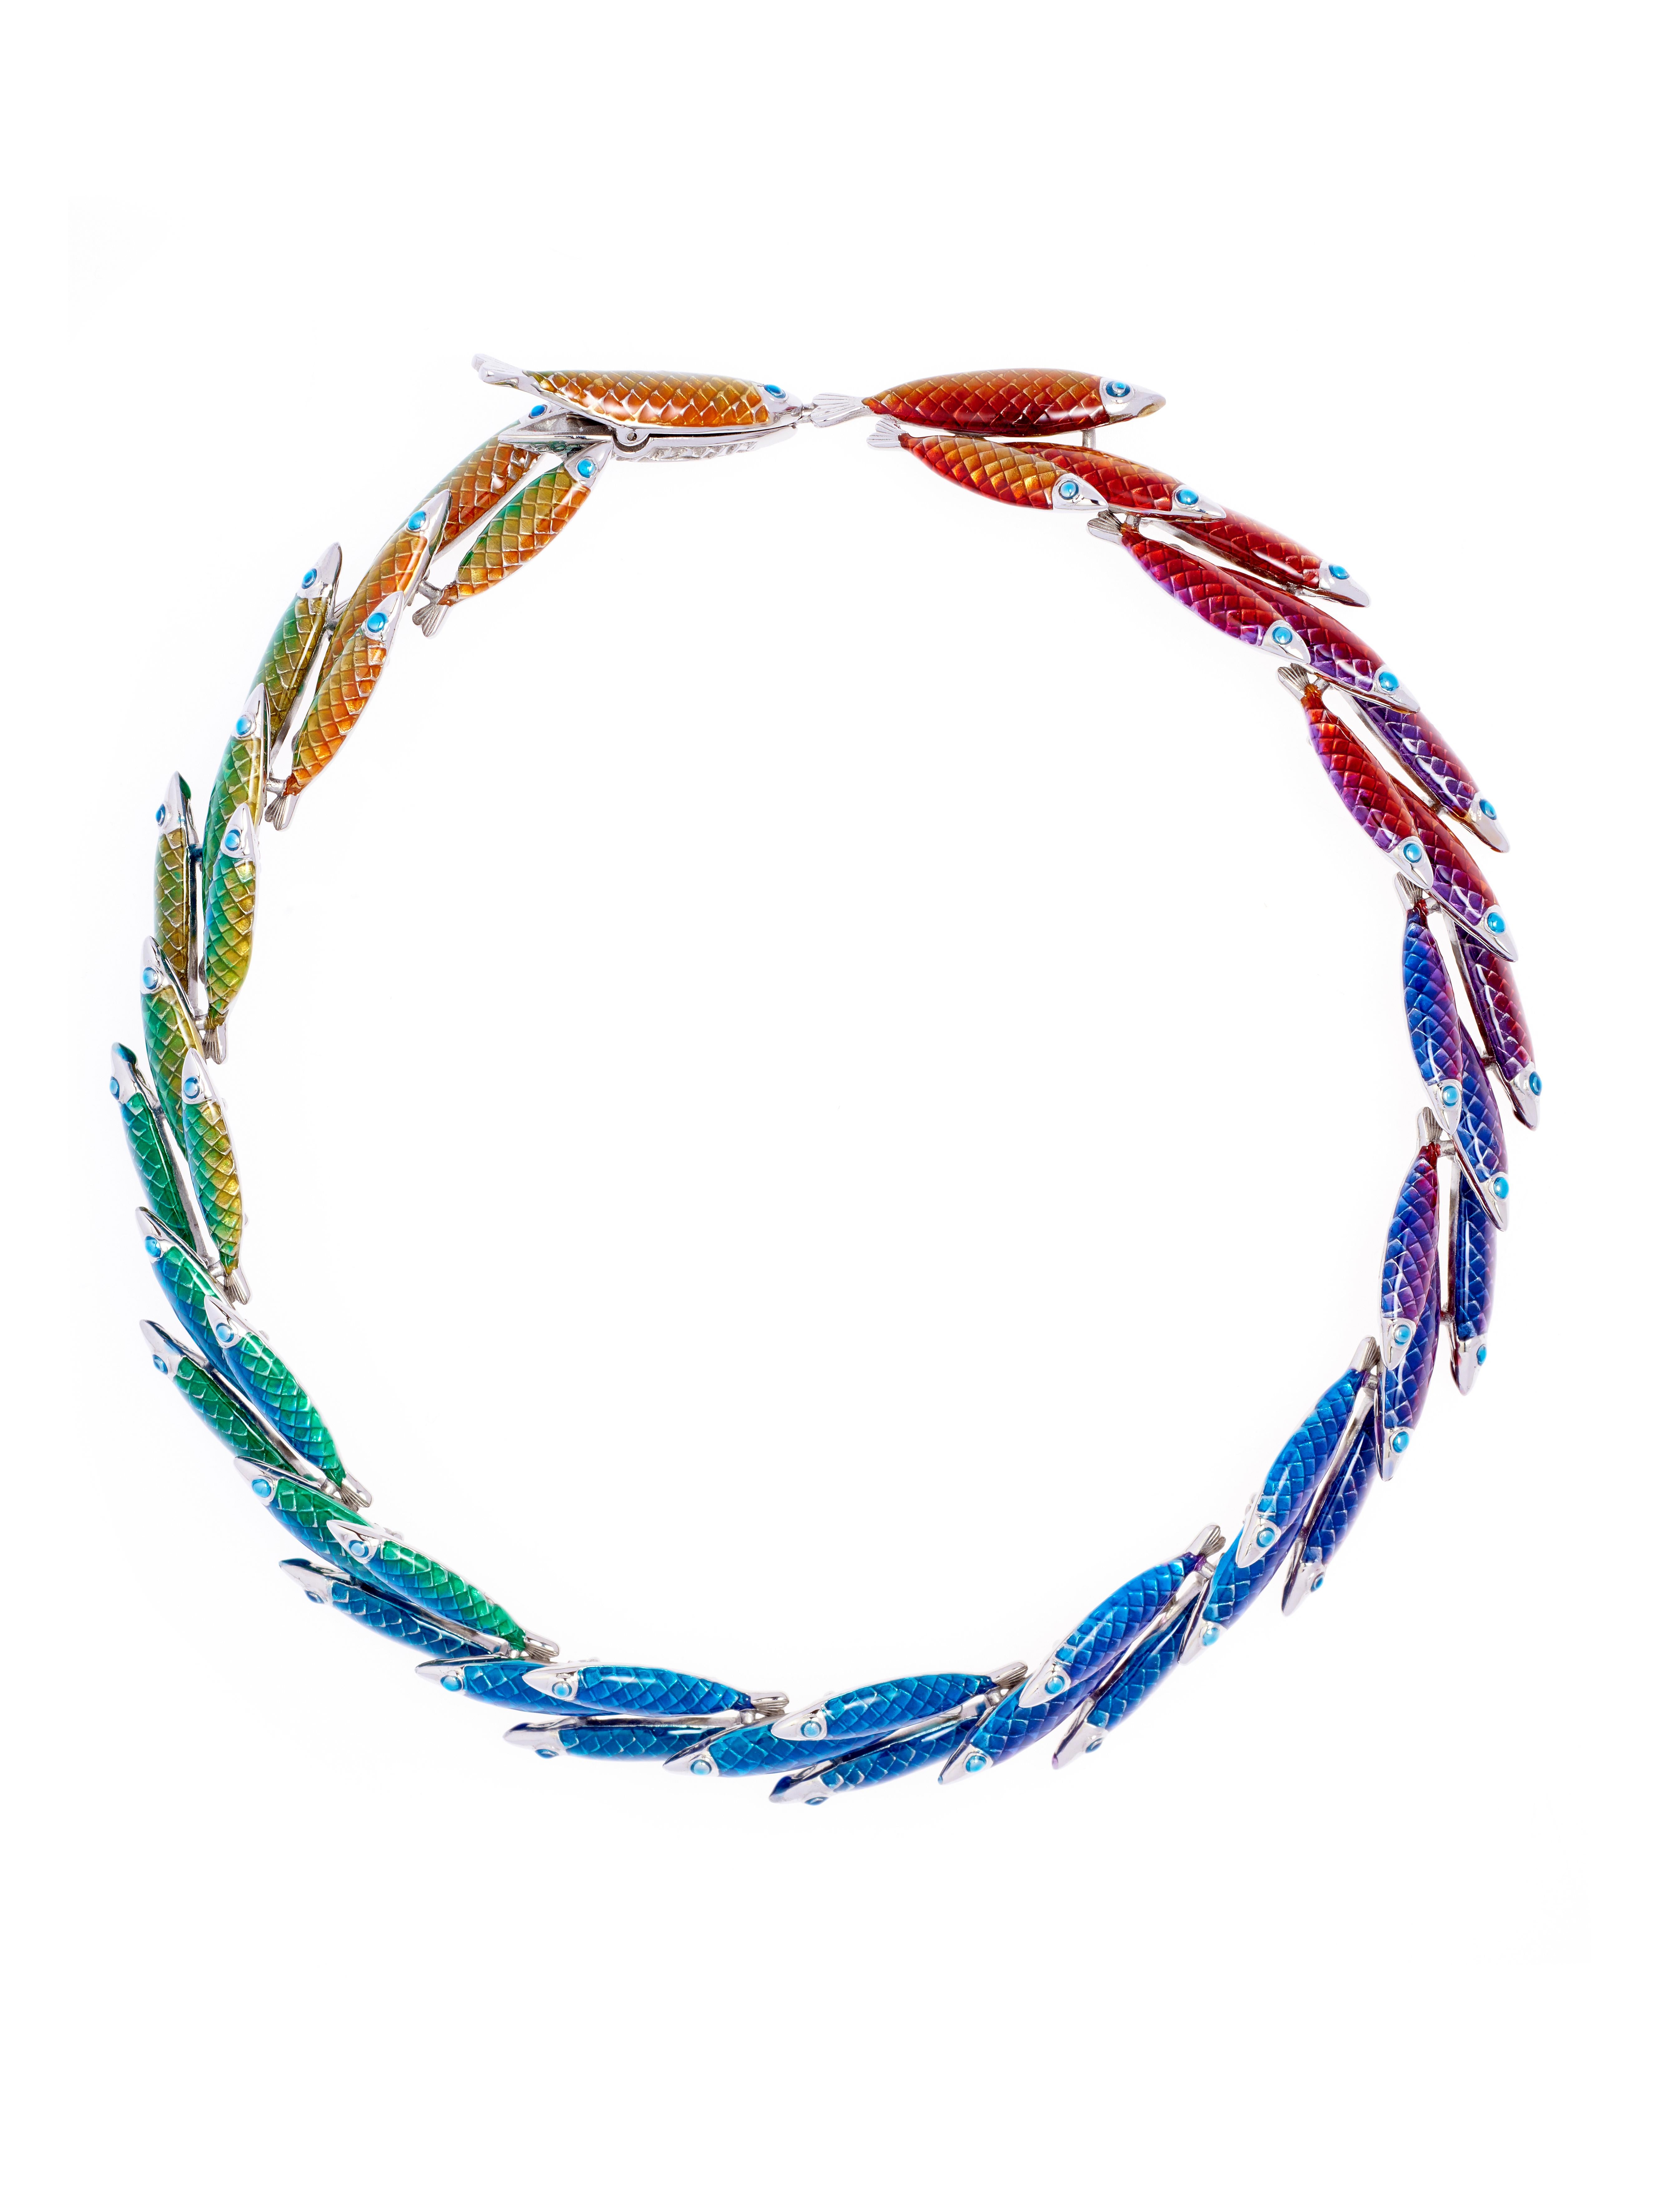 Contemporary Simon Harrison Electra Rainbow Enamel Fish Necklace For Sale